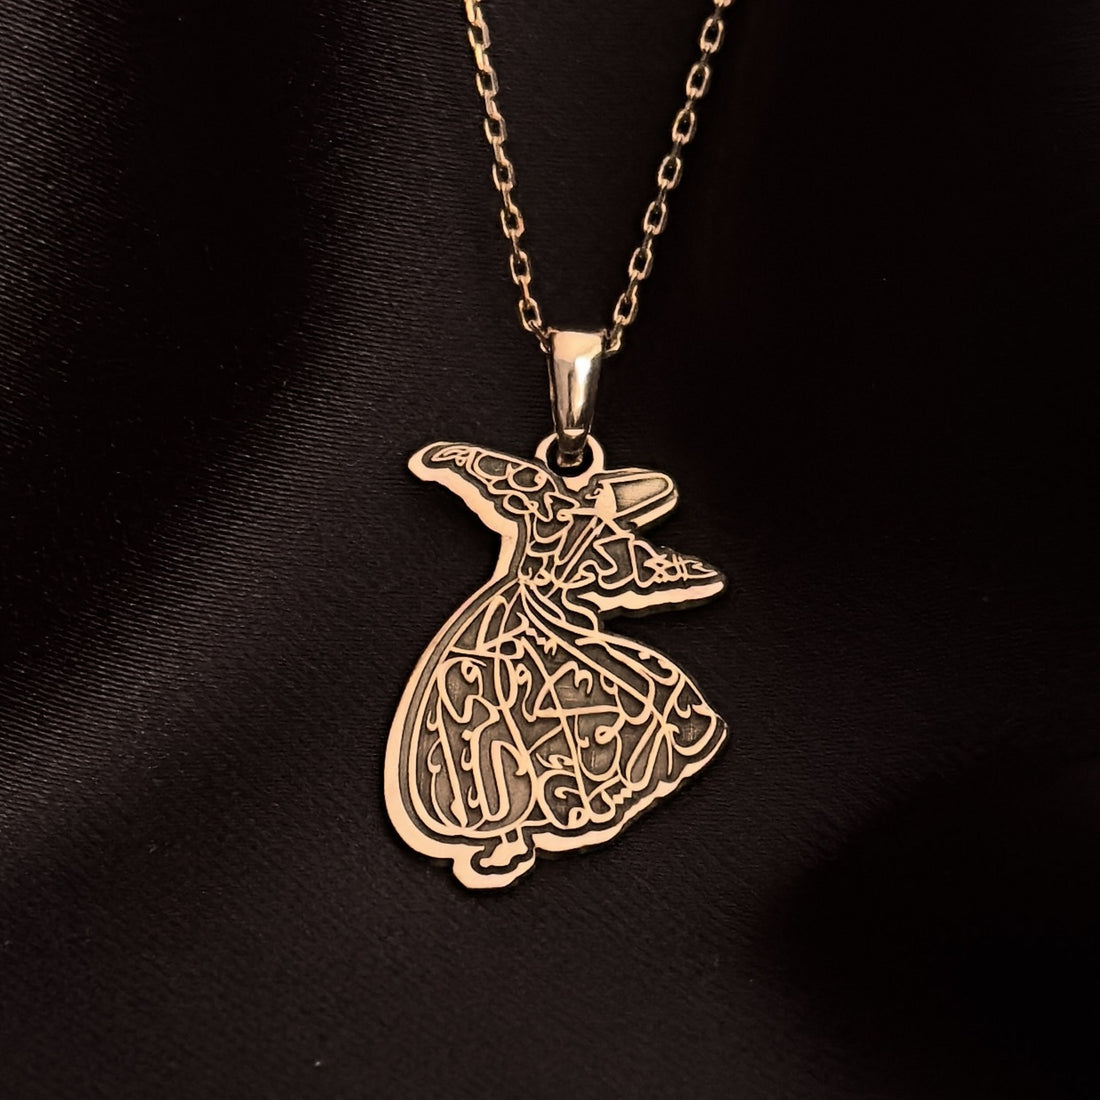 islamic-jewelry-whirling-darwish-islamic-necklace-18k-gold-pendant-on-925-silver-elegant-sufi-inspired-design-shukranislamicart